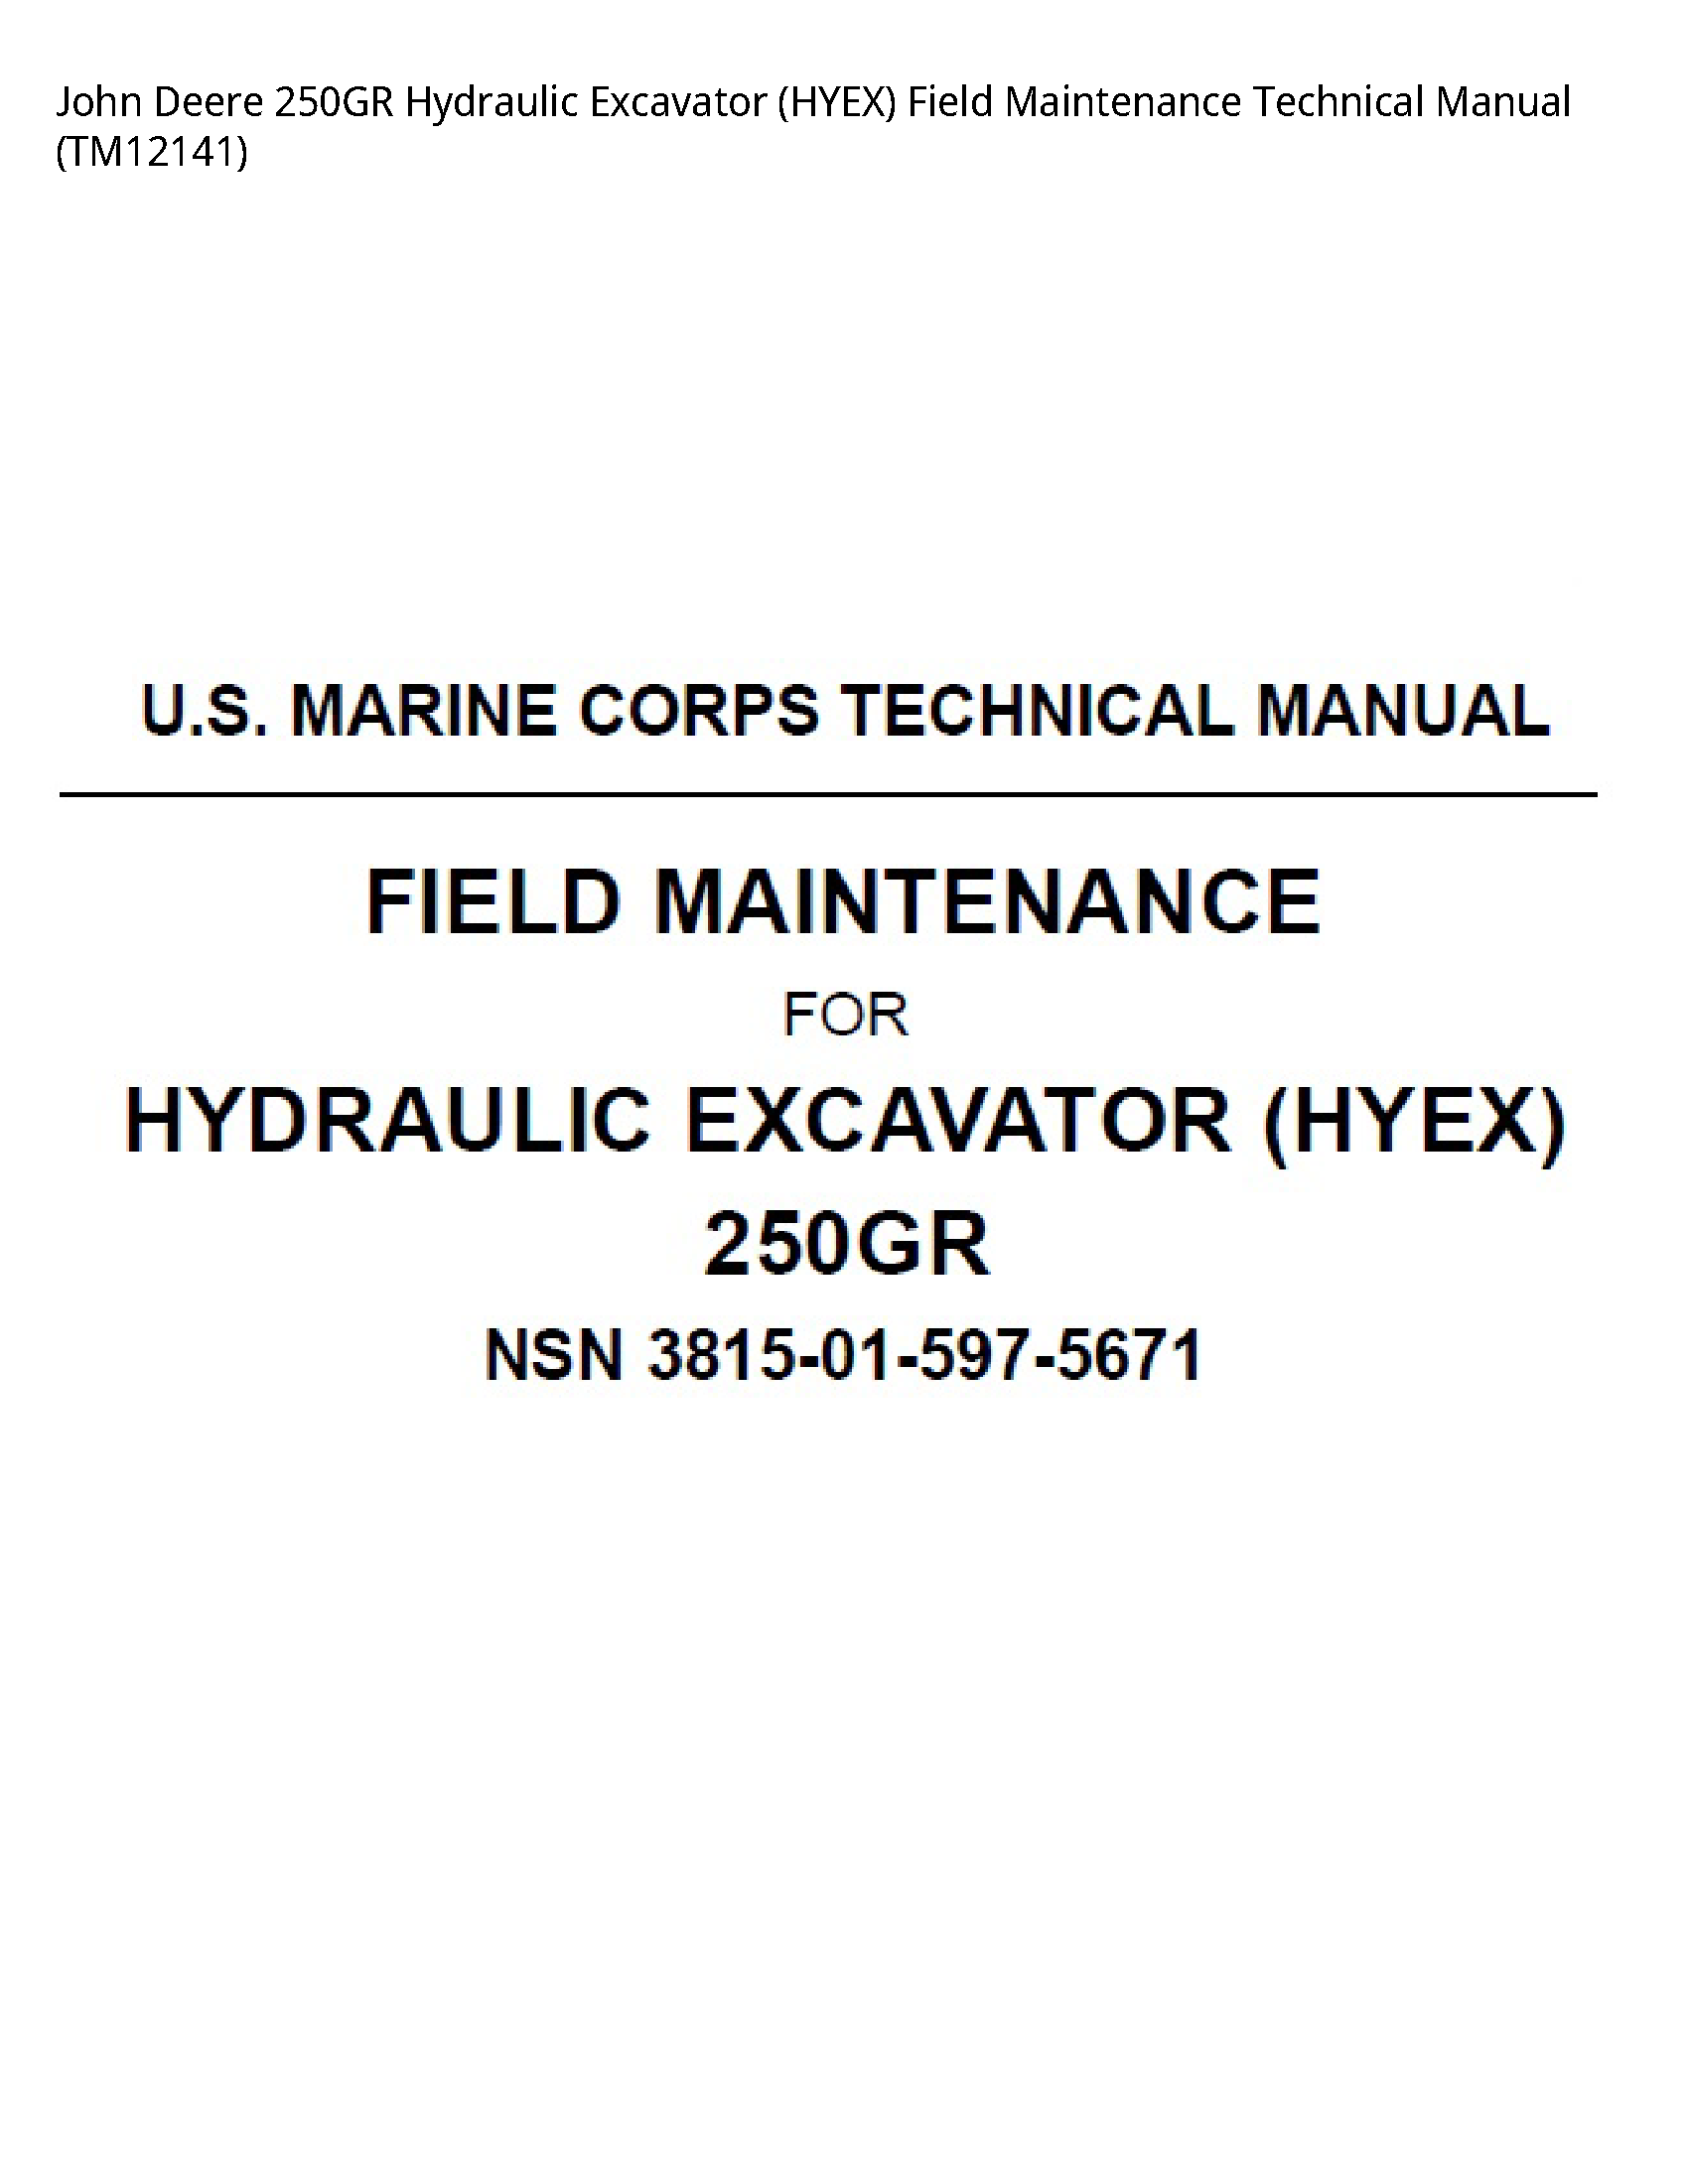 John Deere 250GR Hydraulic Excavator HYEX Field Maintenance Technical manual